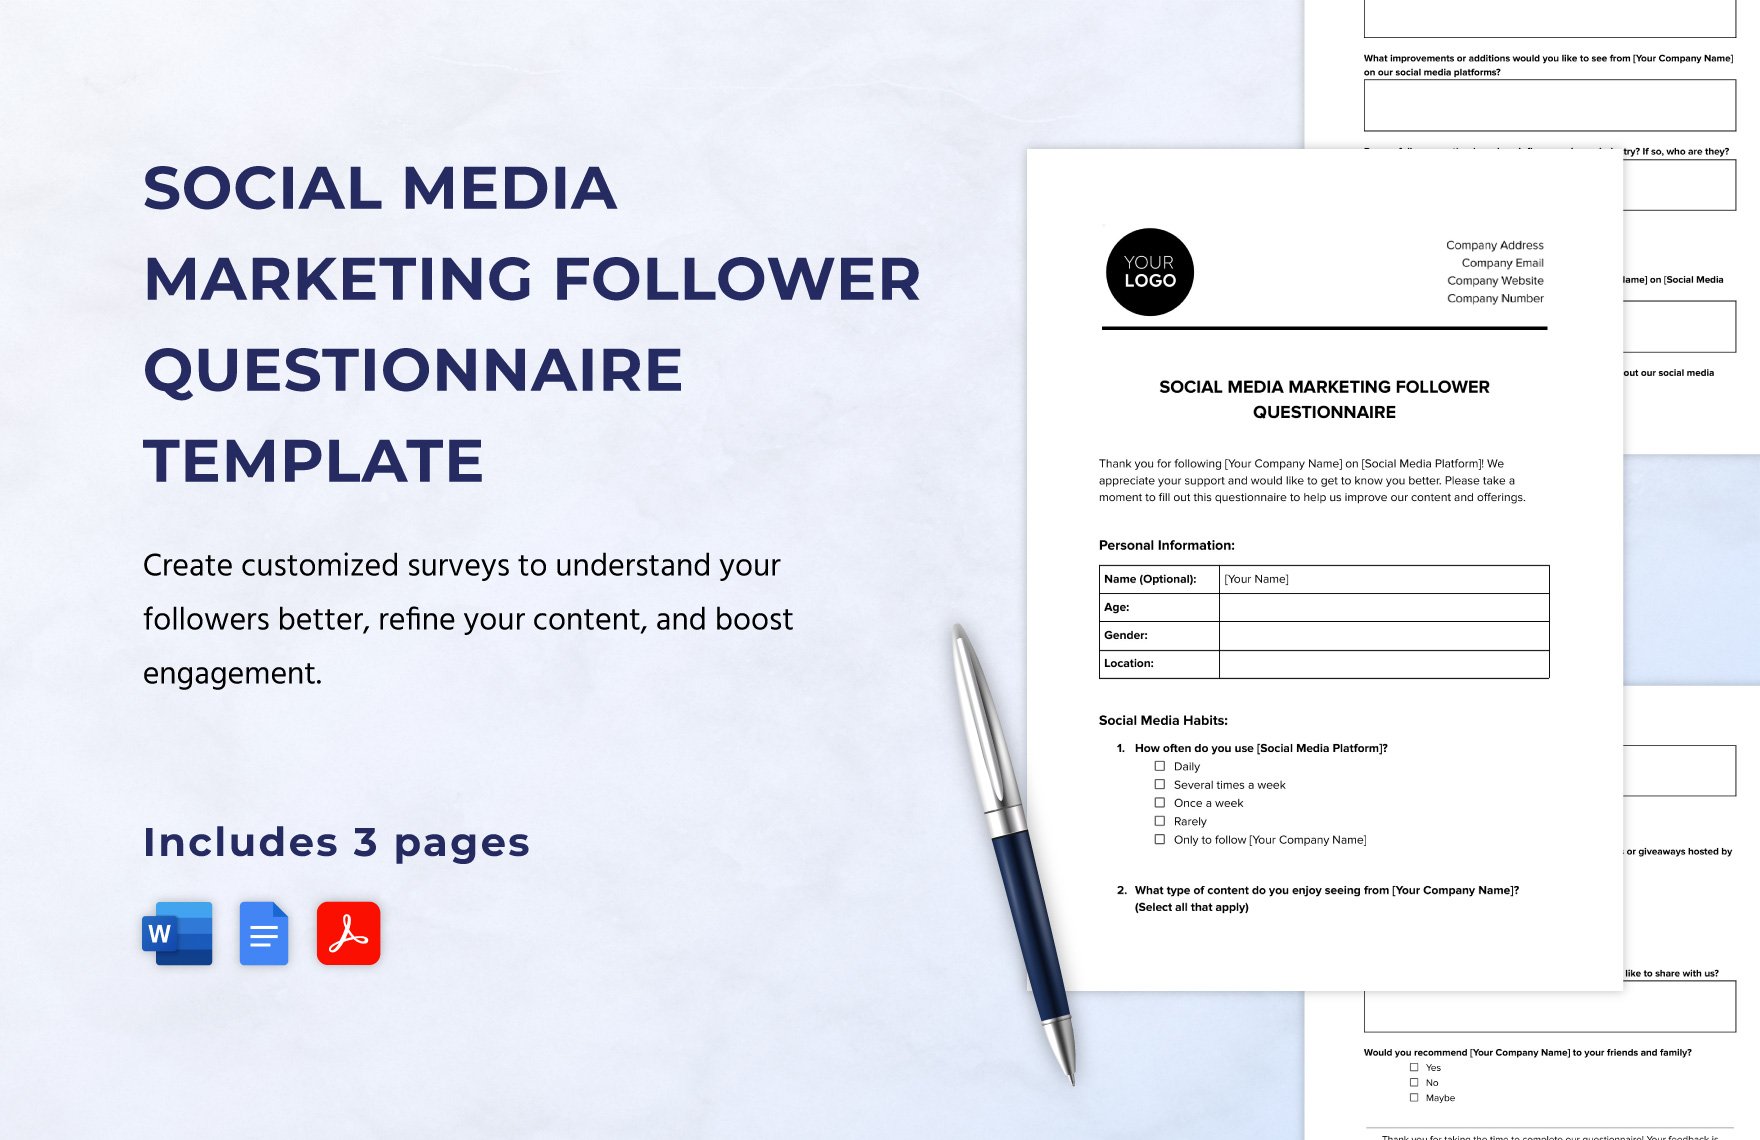 Social Media Marketing Follower Questionnaire Template in Word, Google Docs, PDF